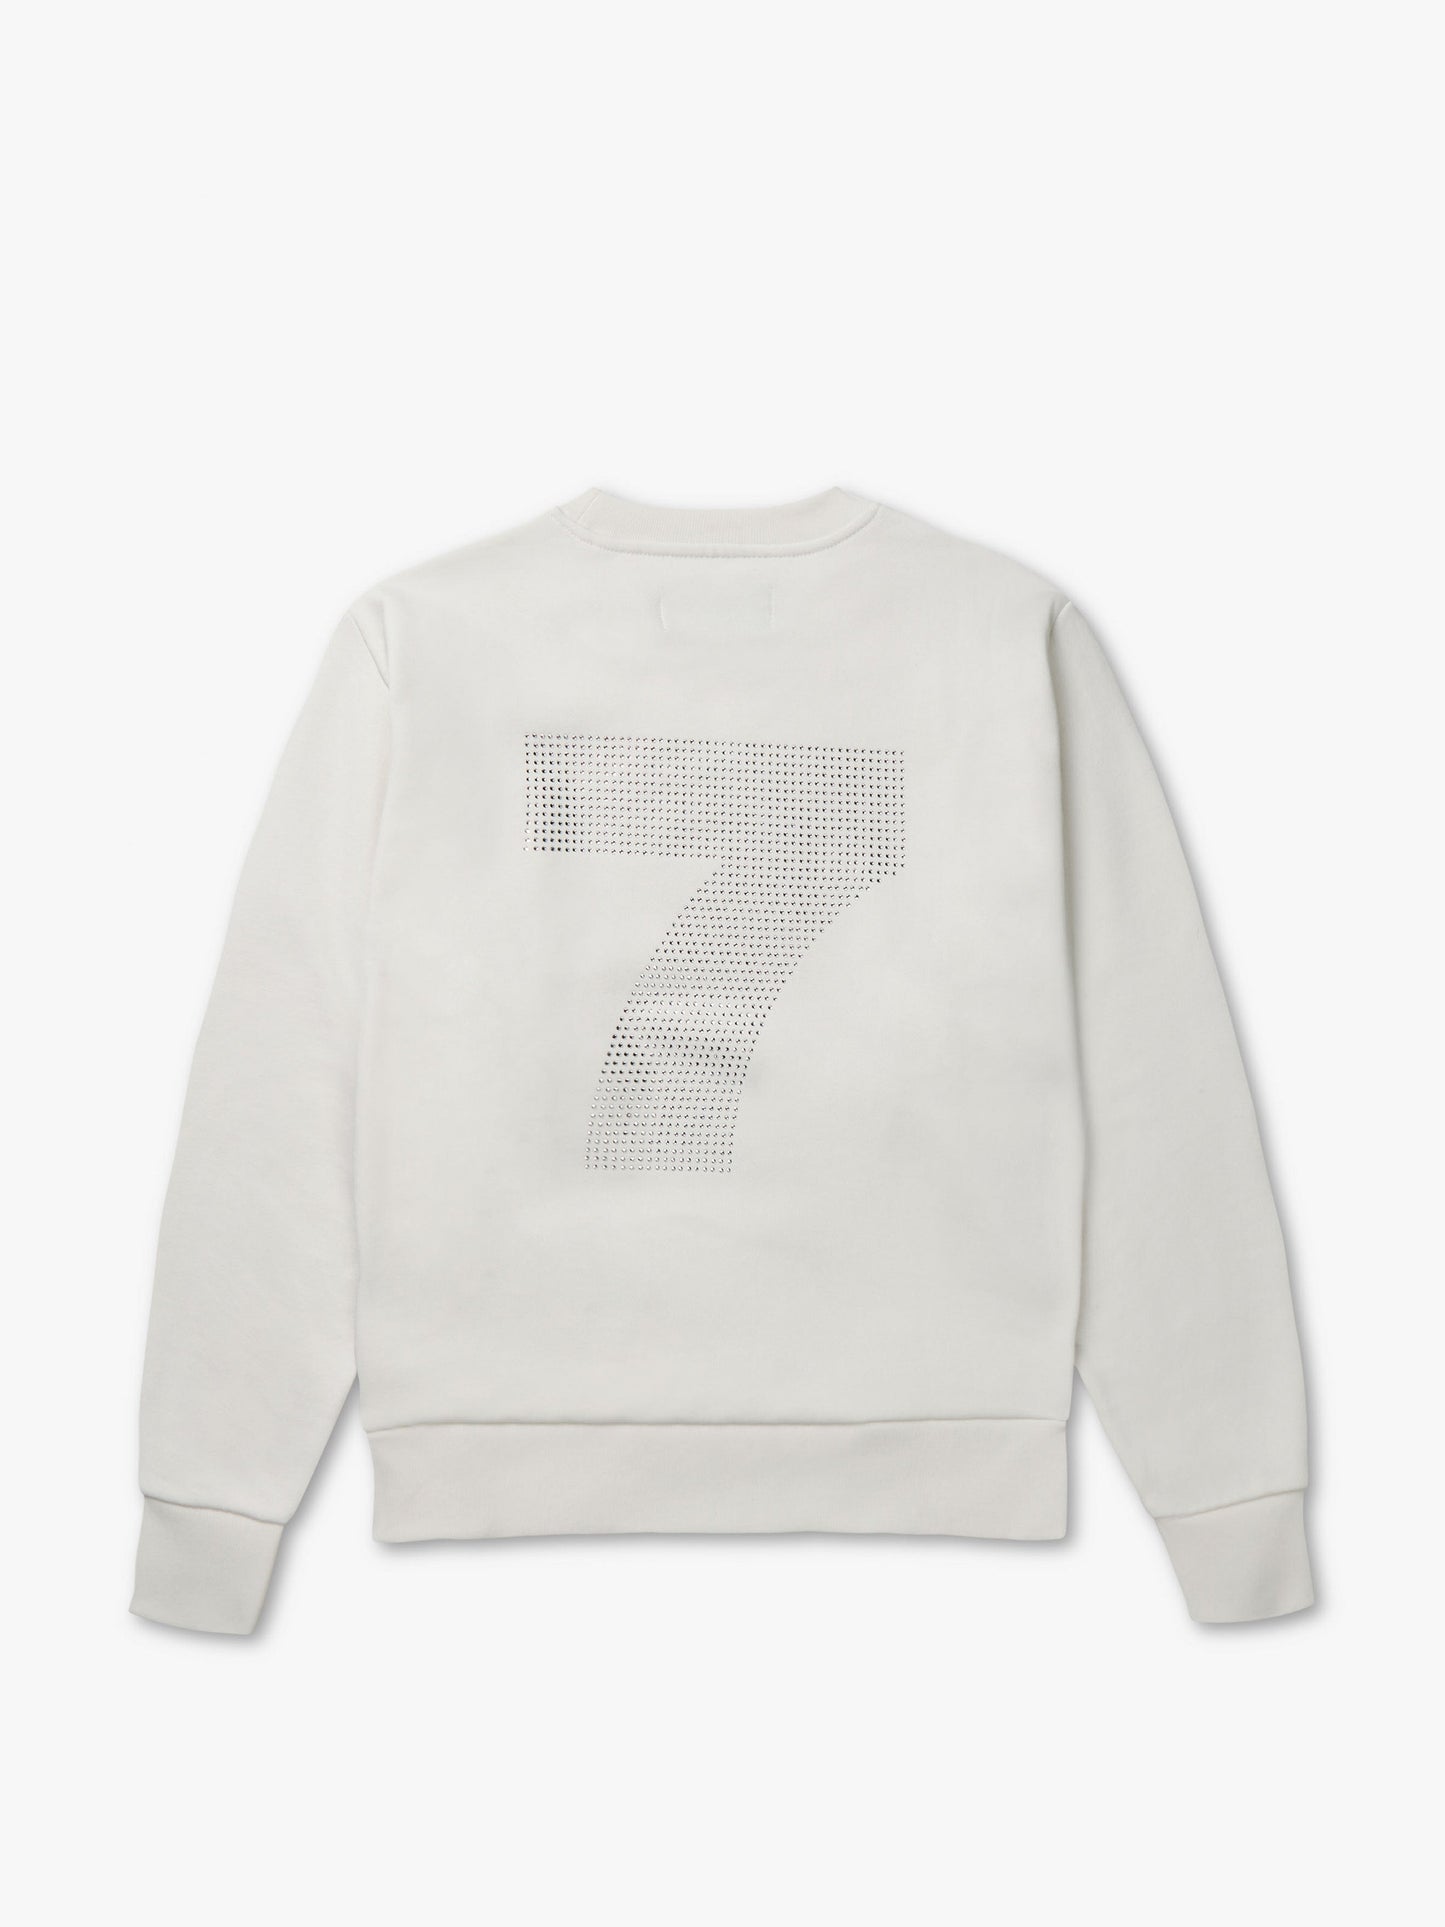 7 DAYS Organic Fitted Crewneck Sweatshirts 050 White Alyssum